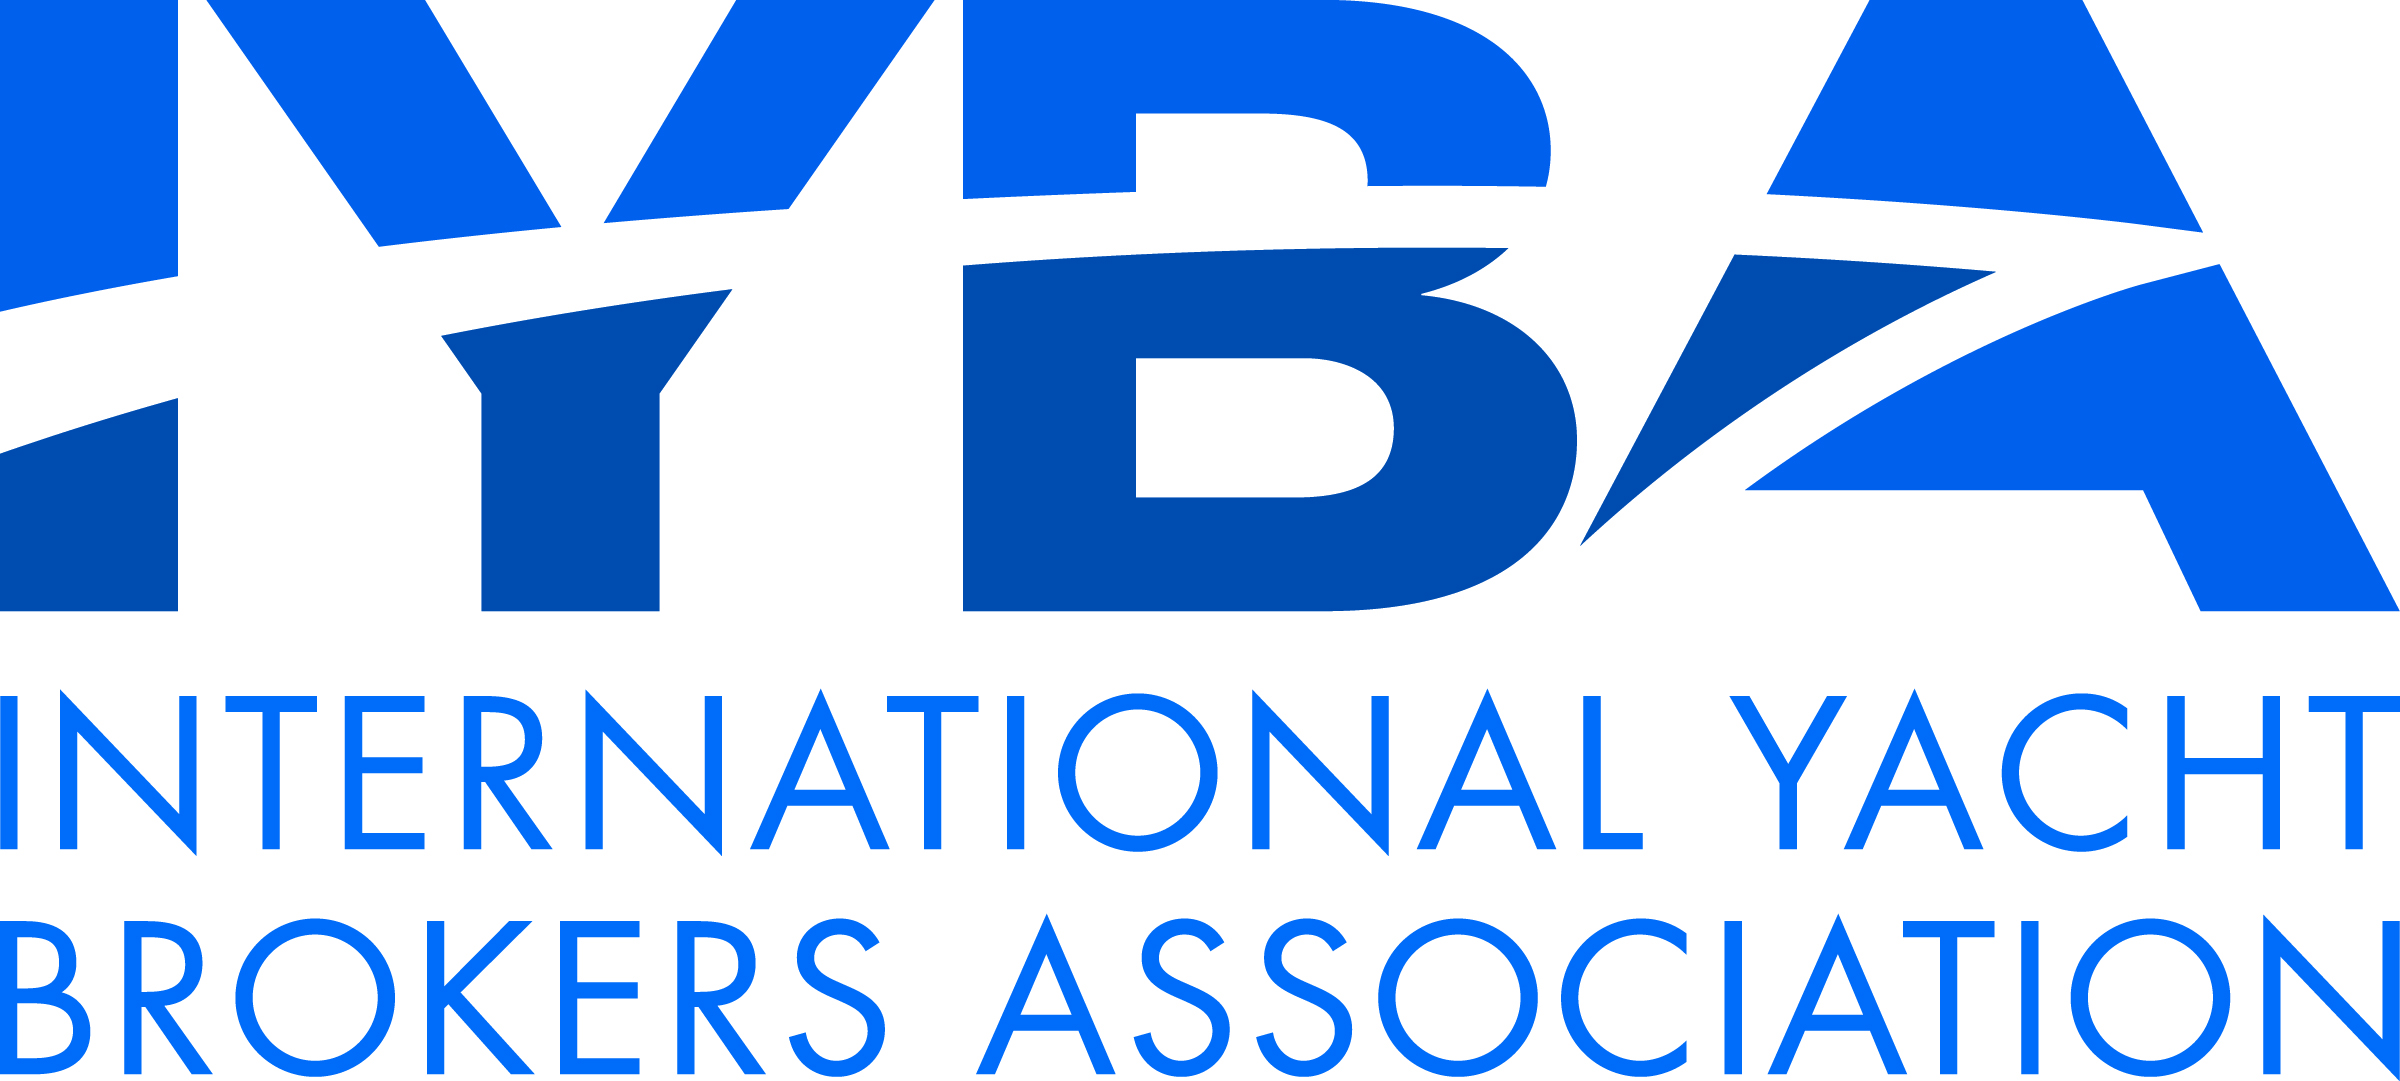 INTERNATIONAL YACHT BROKERS ASSOCIATION logo